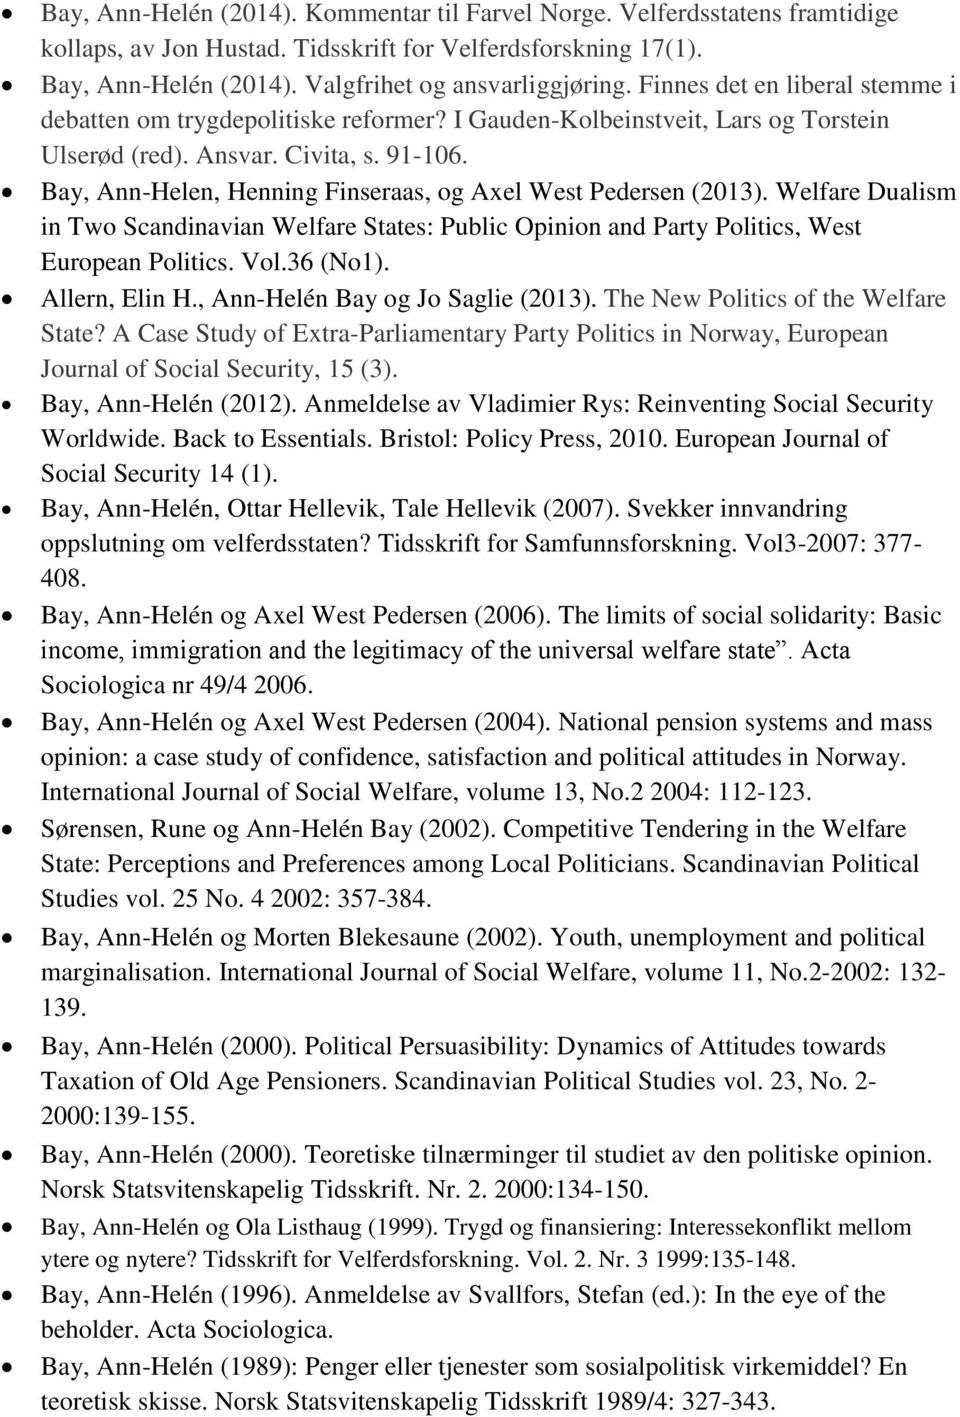 Bay, Ann-Helen, Henning Finseraas, og Axel West Pedersen (2013). Welfare Dualism in Two Scandinavian Welfare States: Public Opinion and Party Politics, West European Politics. Vol.36 (No1).